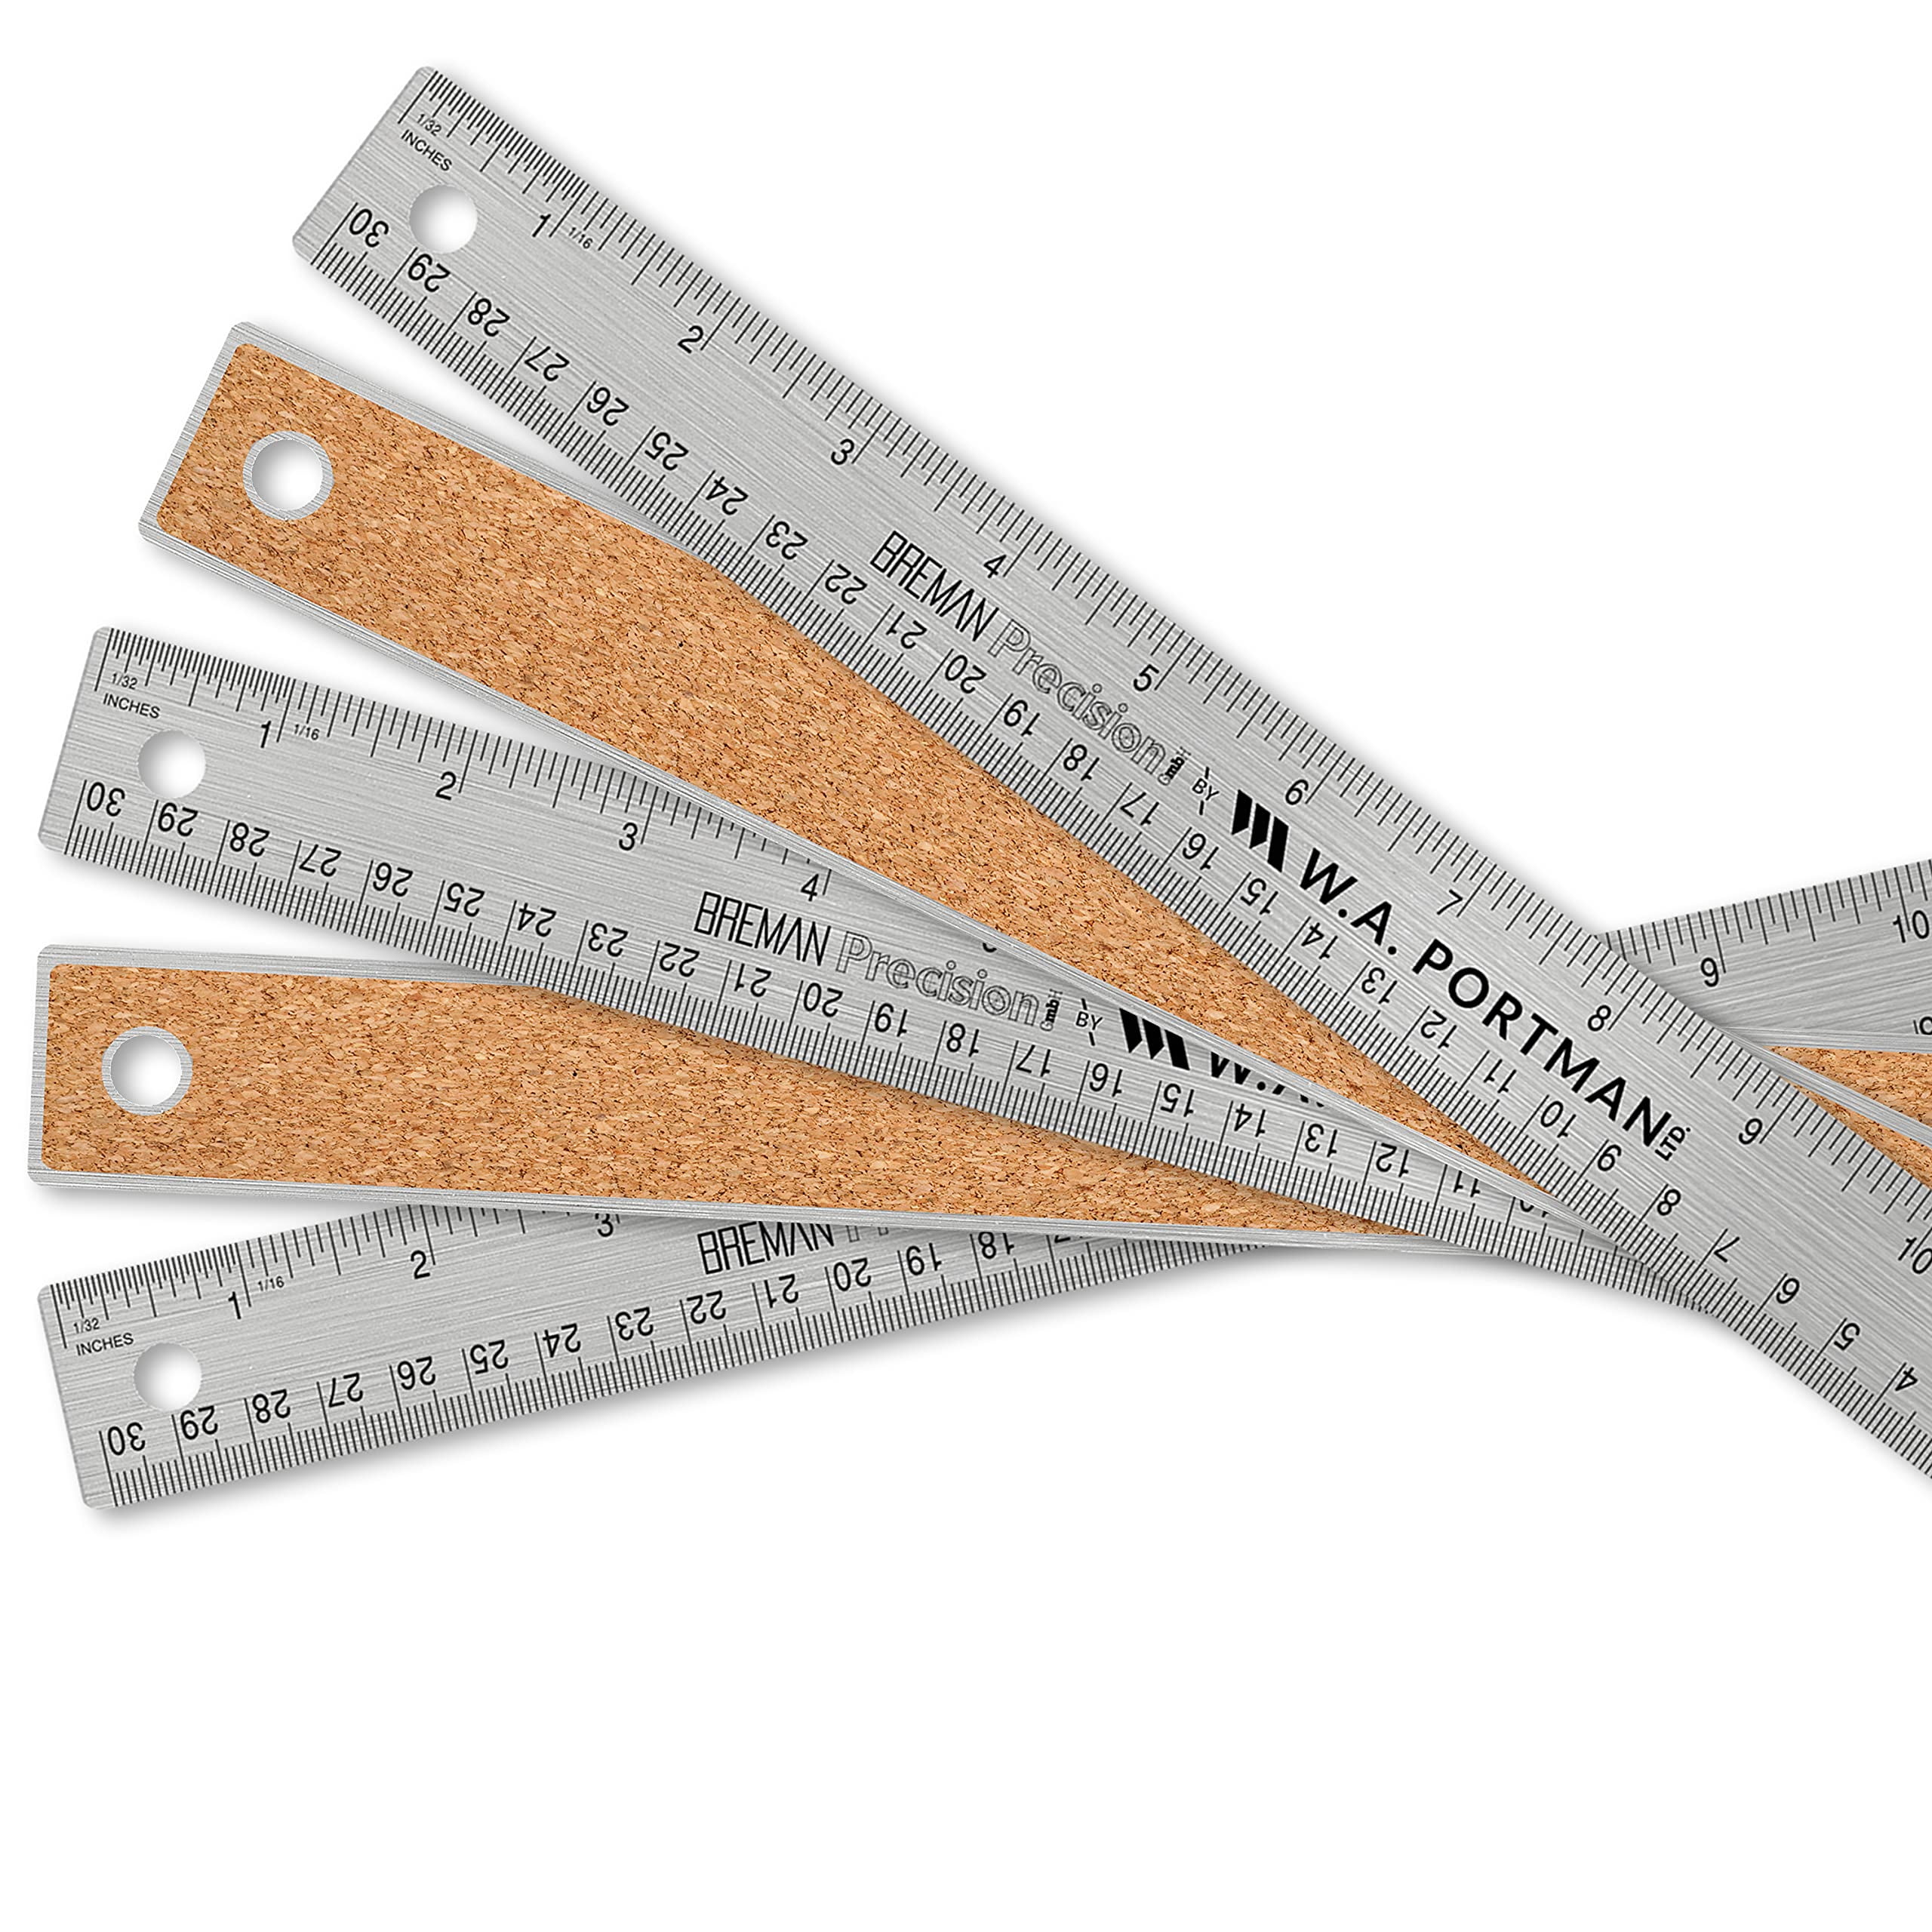 Breman Precision Stainless Steel Ruler, 24-inch Cork Back Ruler 10-Pack